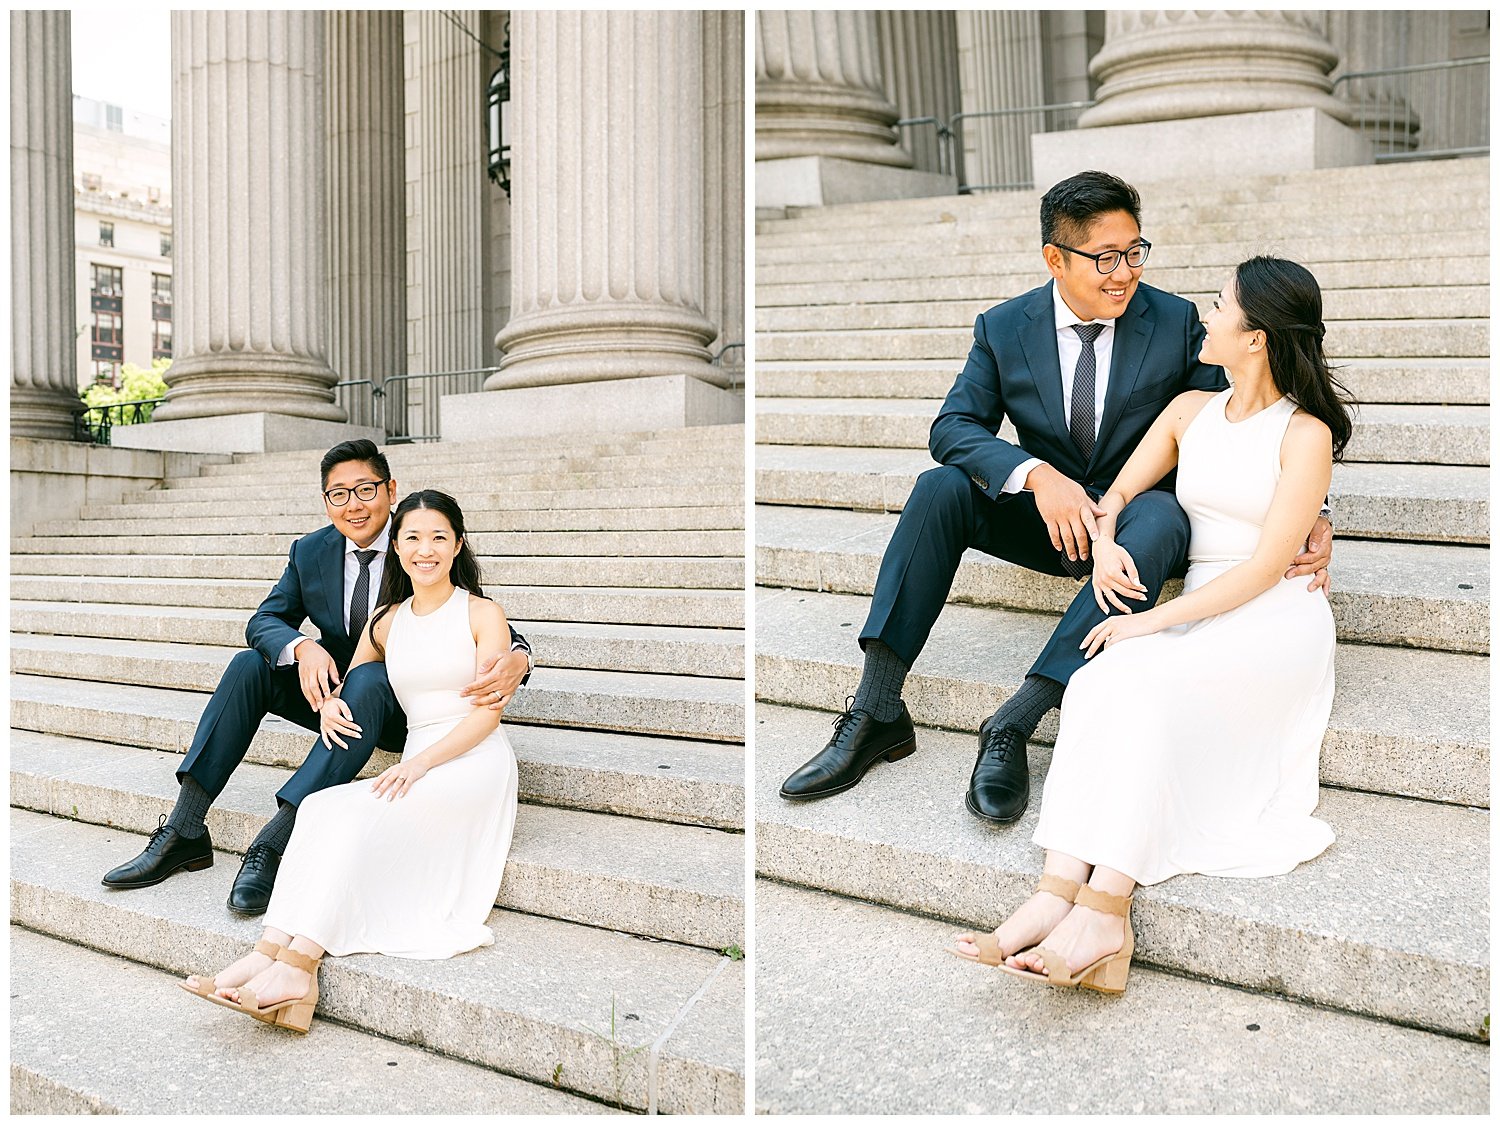 NYC-Marriage-Bureau-Elopement-Wedding-at-City-Hall-Apollo-Fields-06.jpg